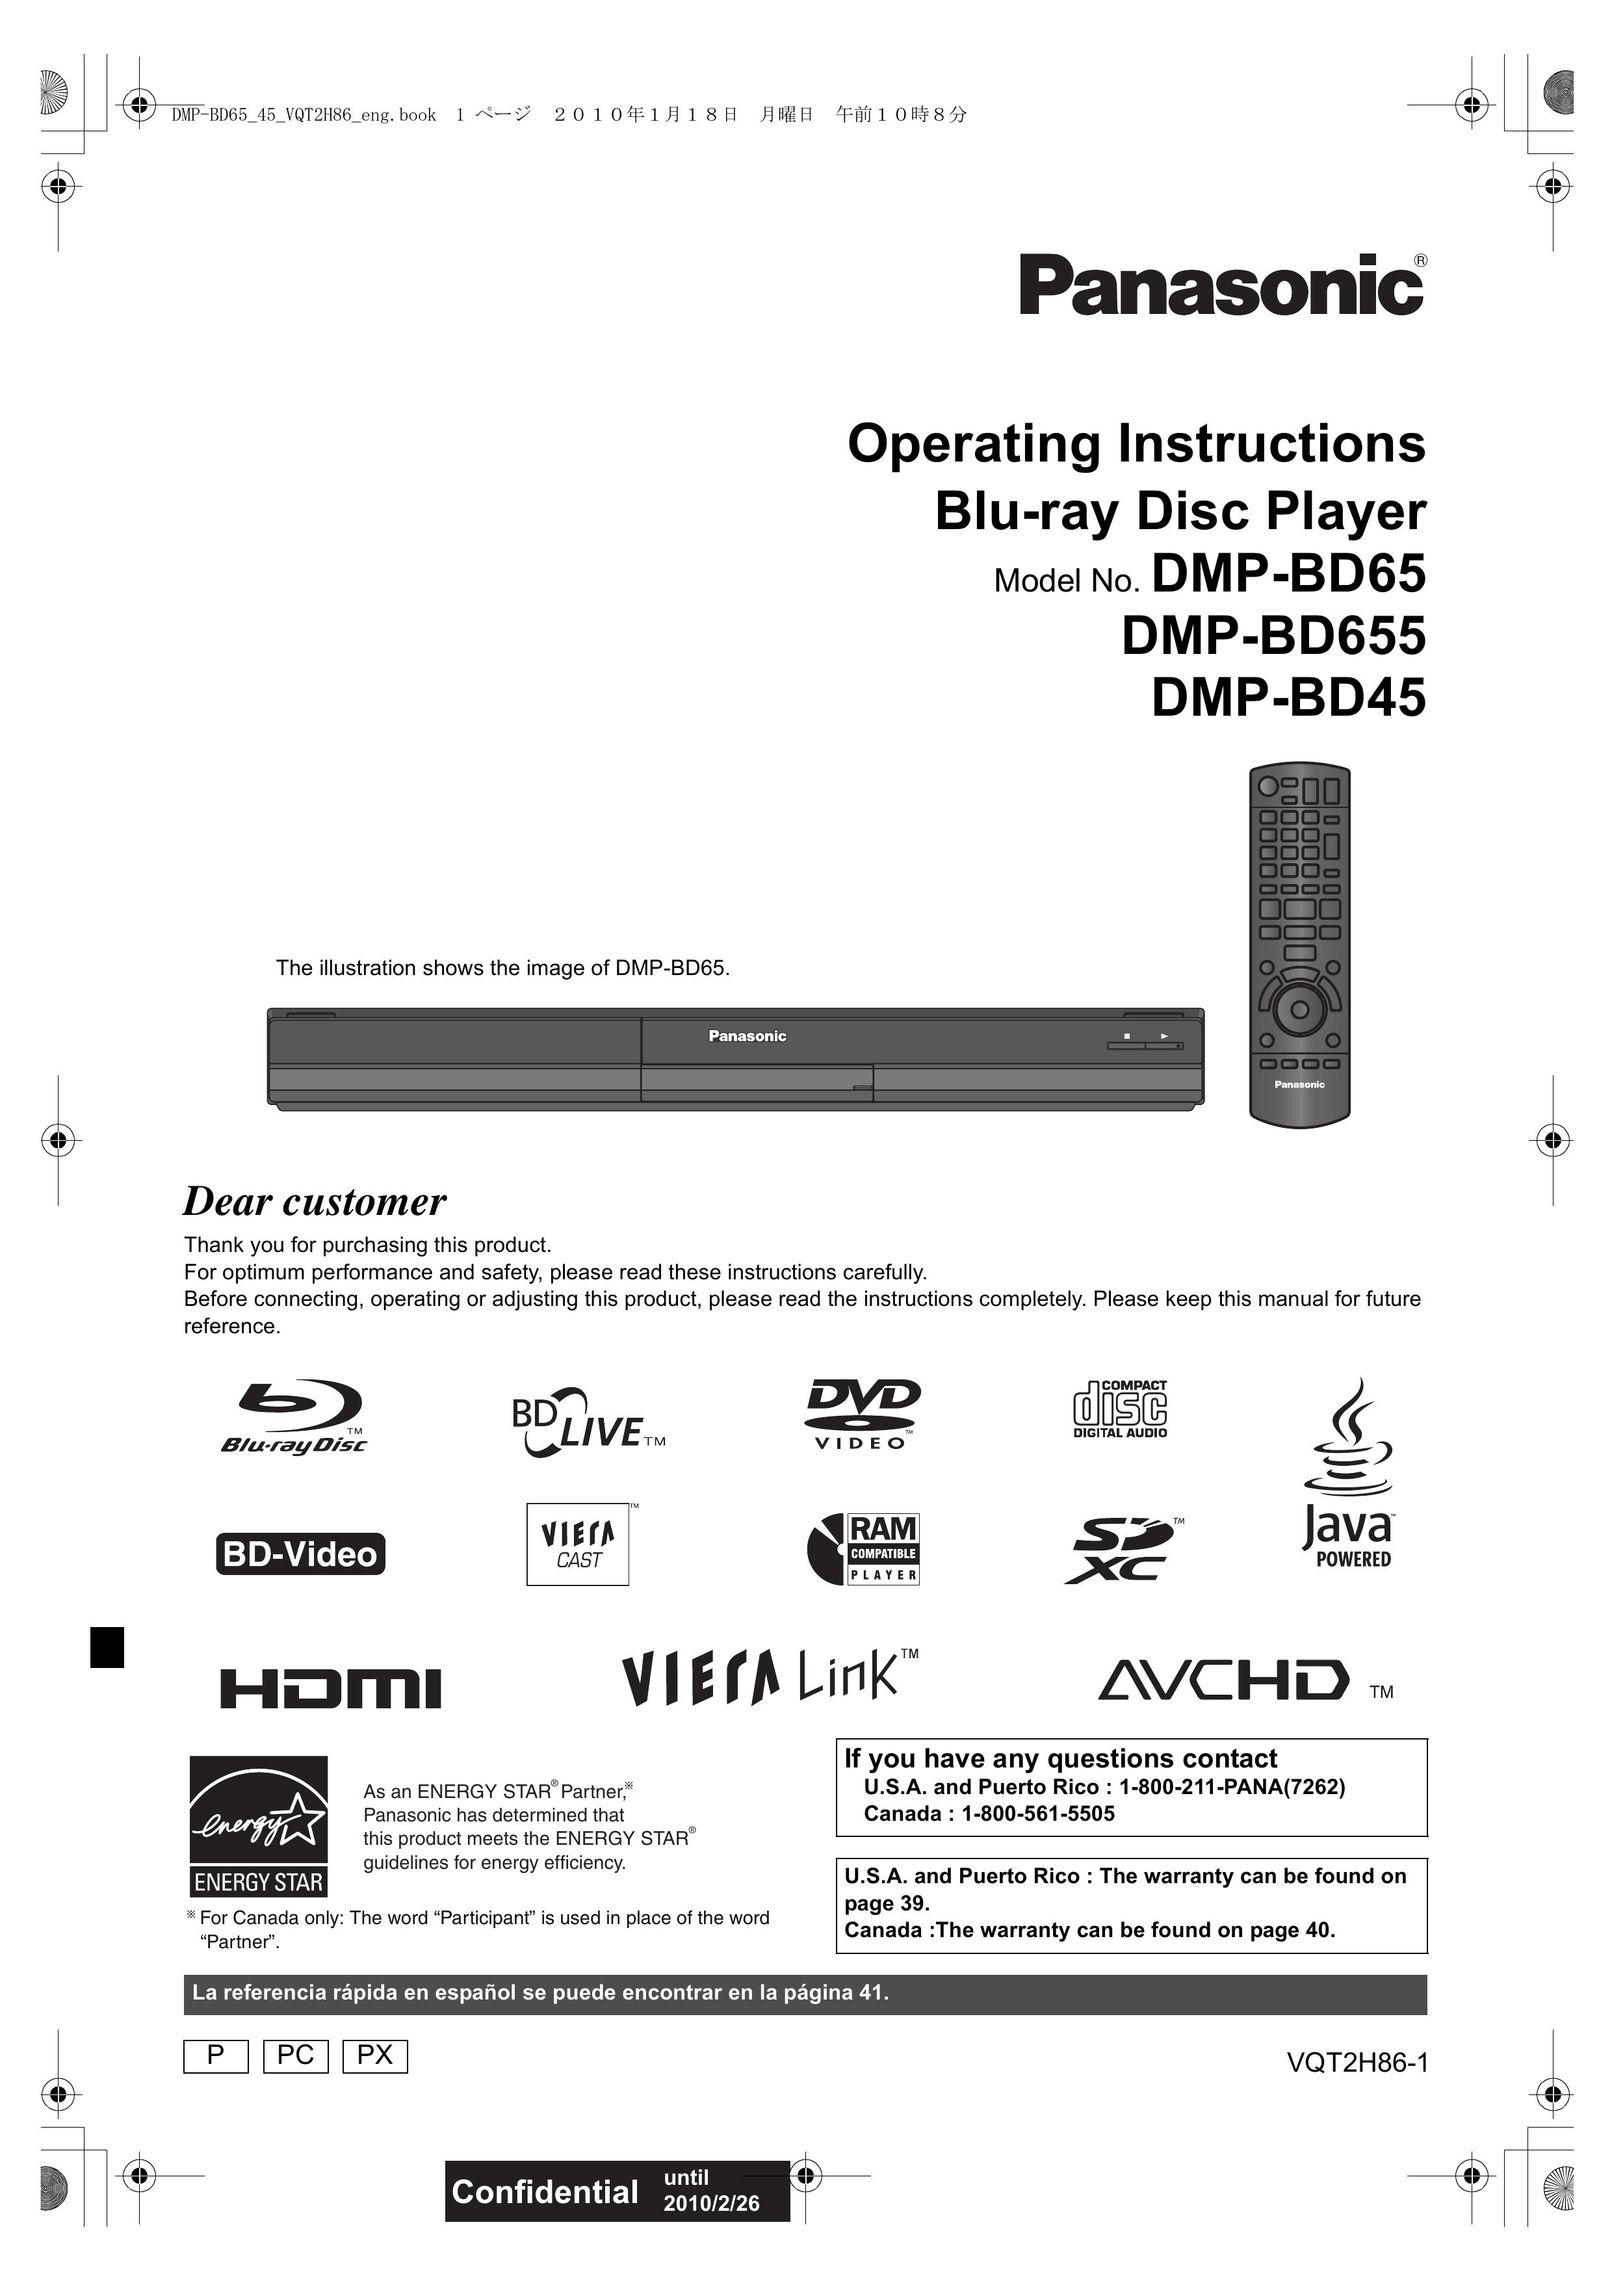 Panasonic DMP-BD45 Blu-ray Player User Manual